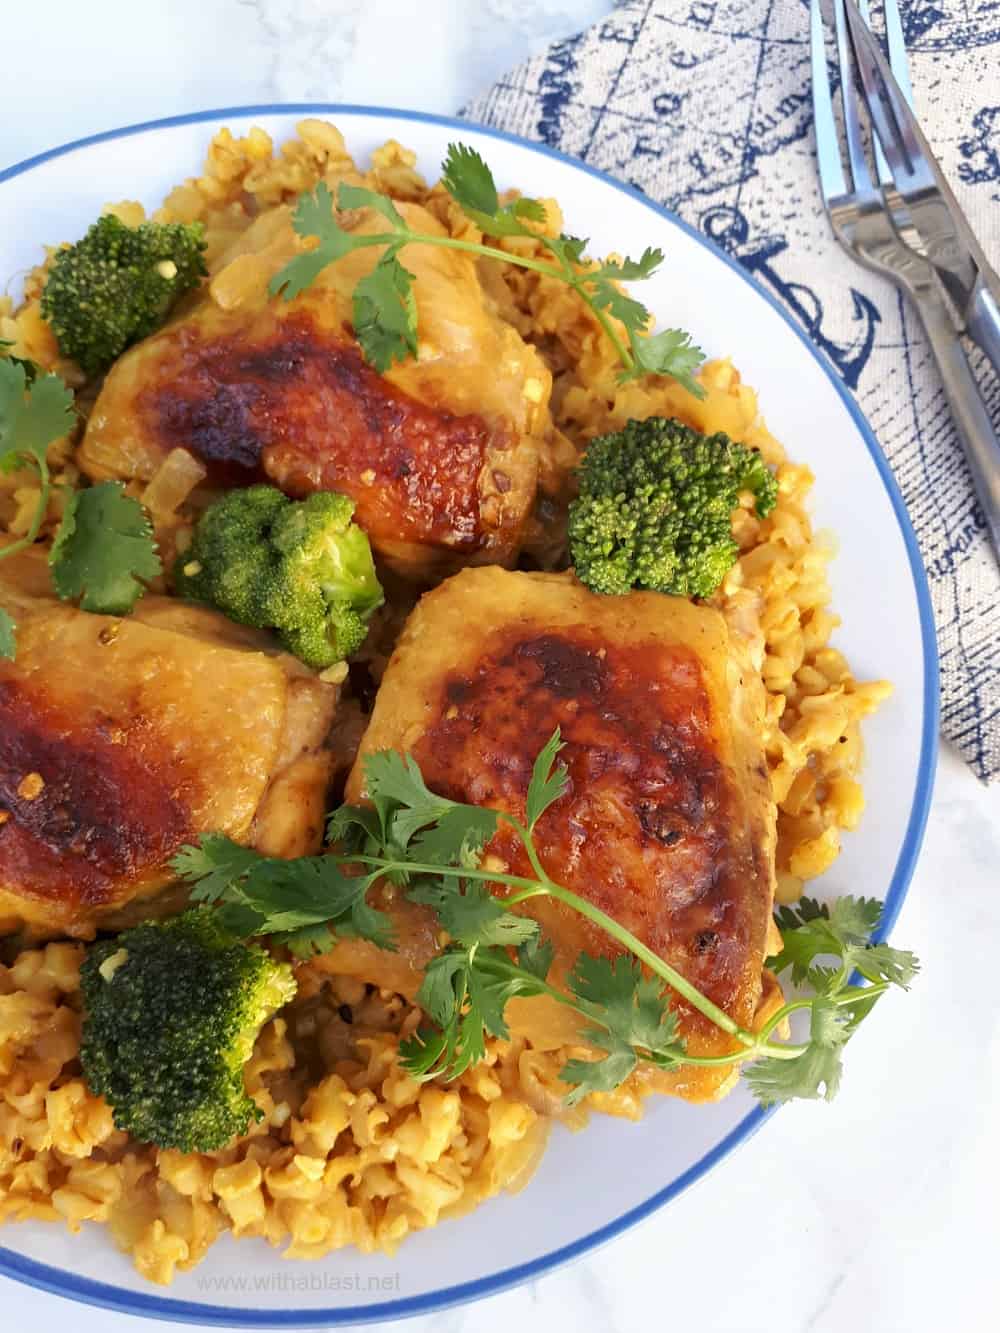 Turmeric Chicken With Barley And Broccoli